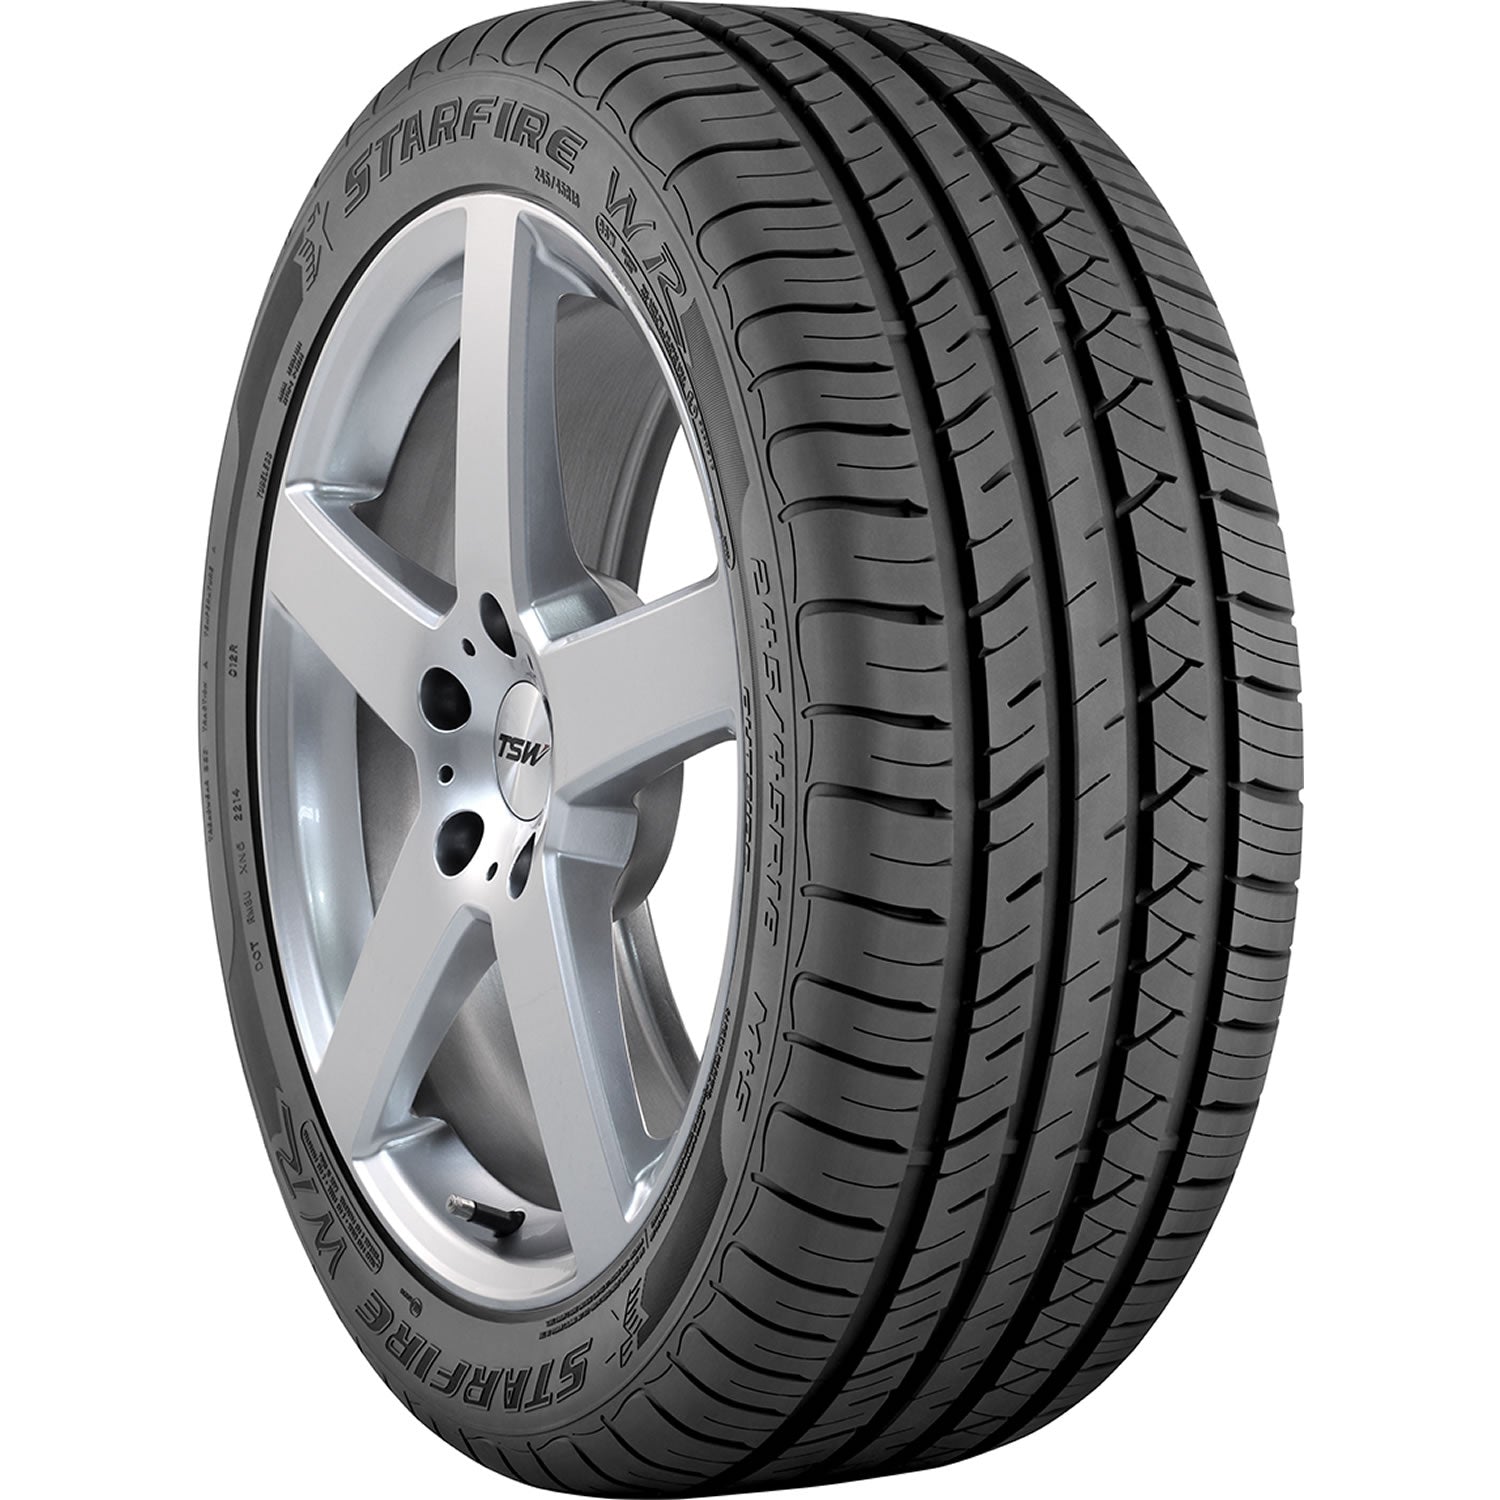 STARFIRE WR 205/50R17XL (25.1X8.4R 17) Tires